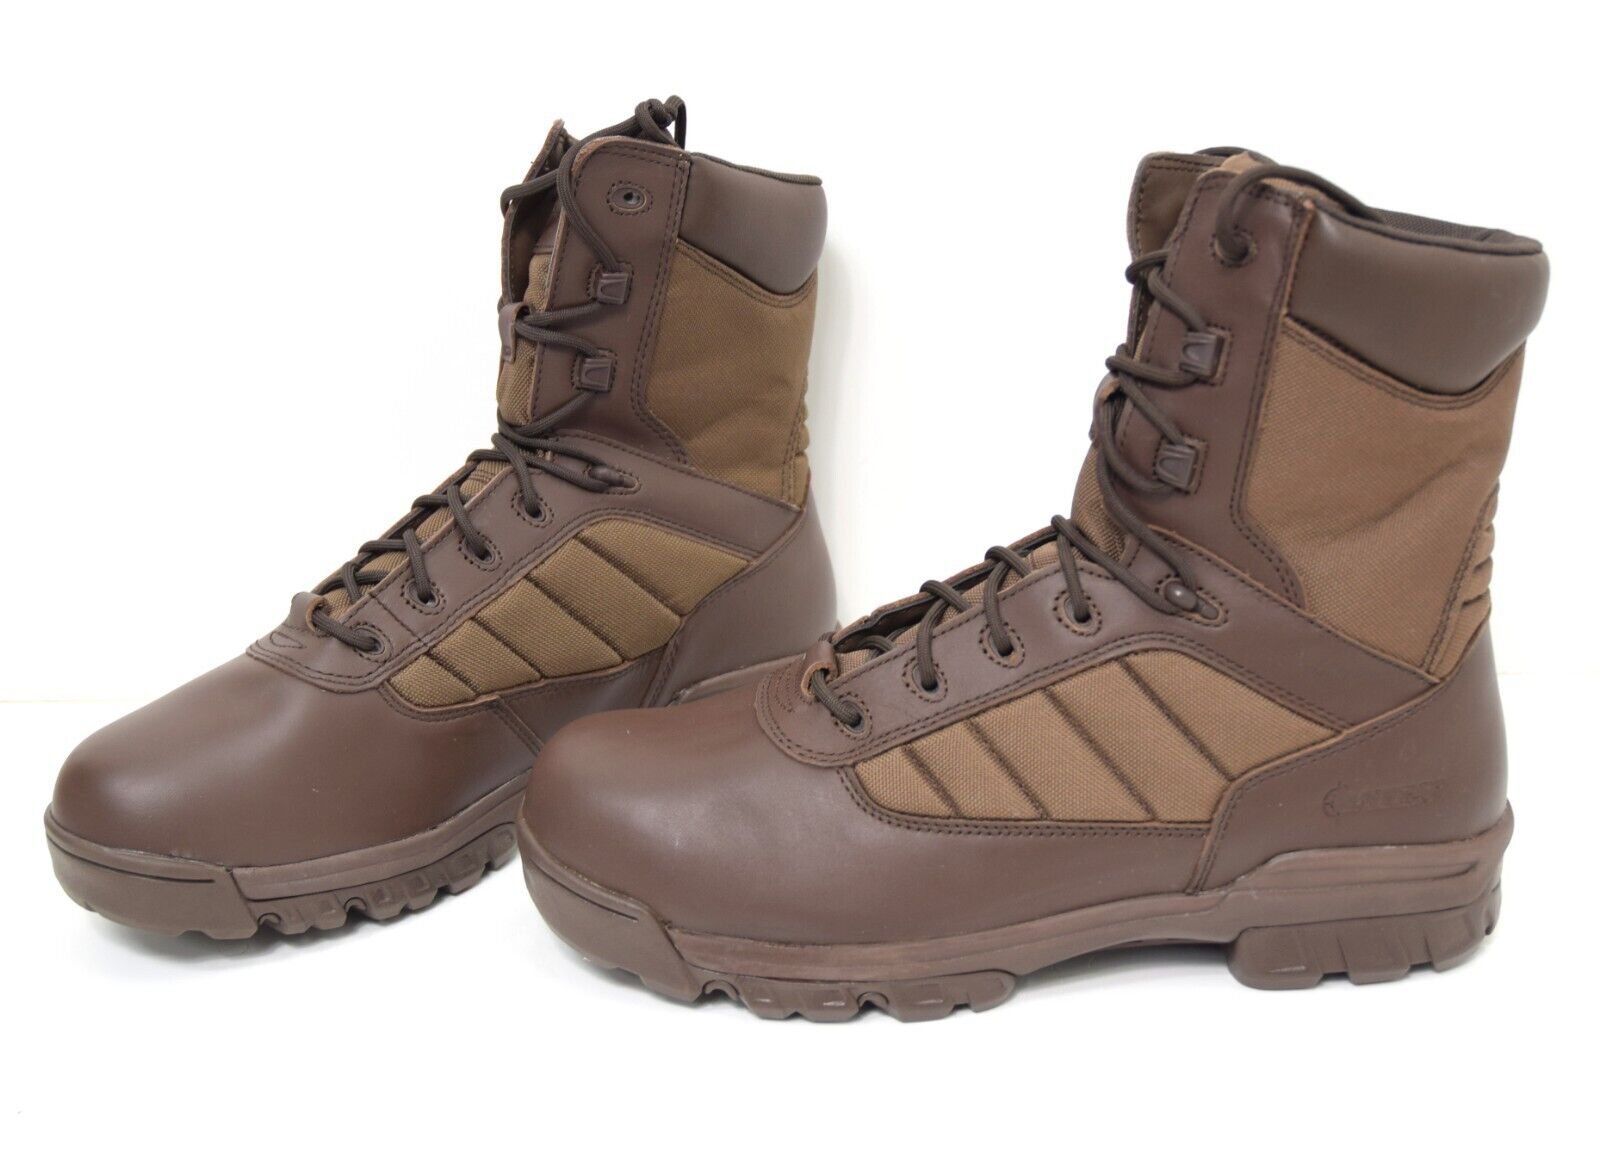 BRAND NEW UK 13 British Army Brown BATES Boots Combat Boots UK Military Hiking